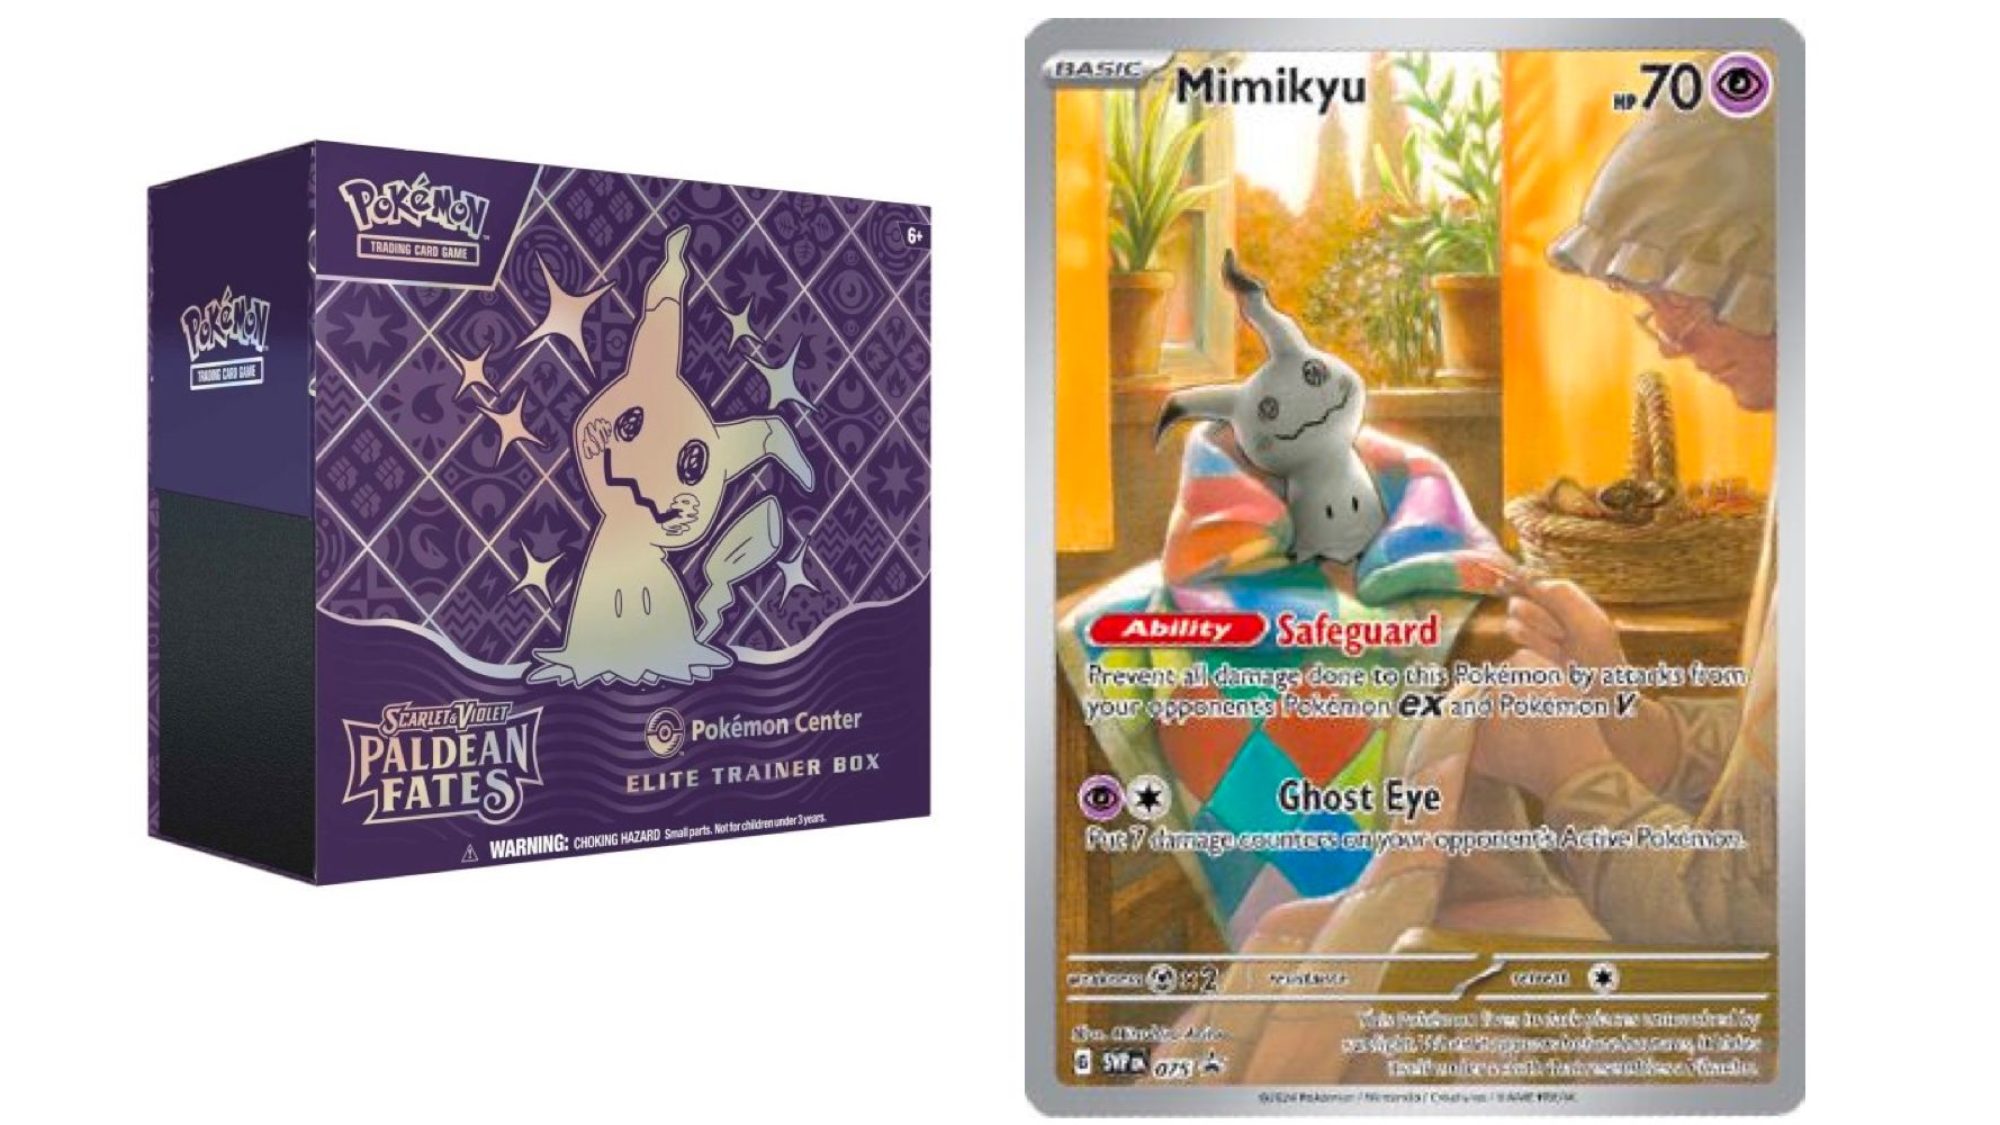 Pokémon TCG Announces Mimikyu Ex Collection For 2023